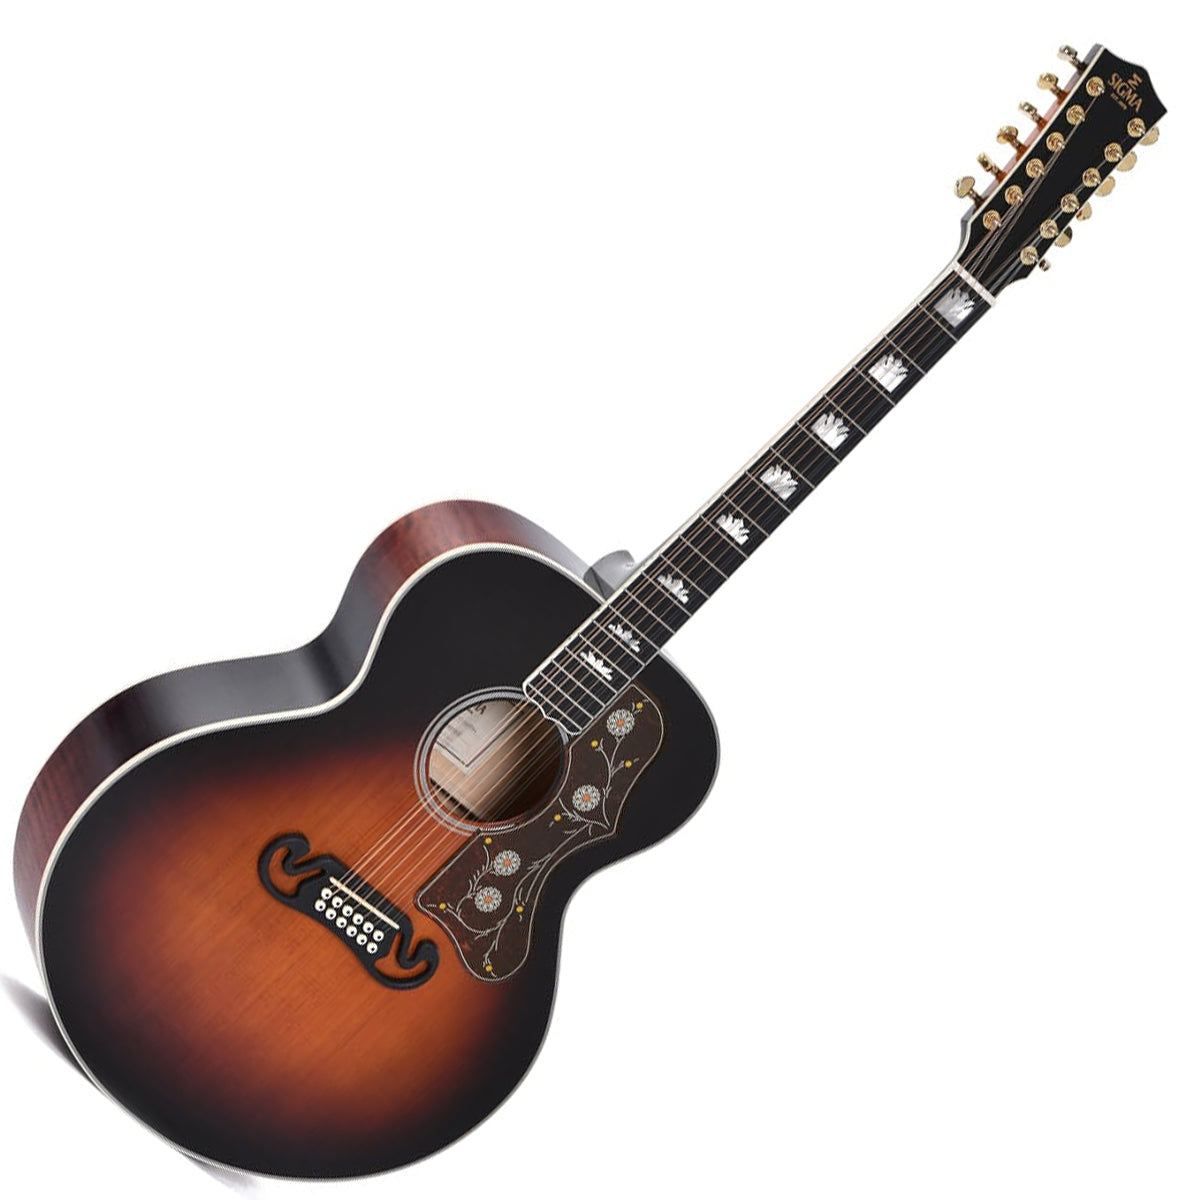 Sigma GJA12-SG200 12 String Electro Acoustic Guitar - Vintage Sunburst